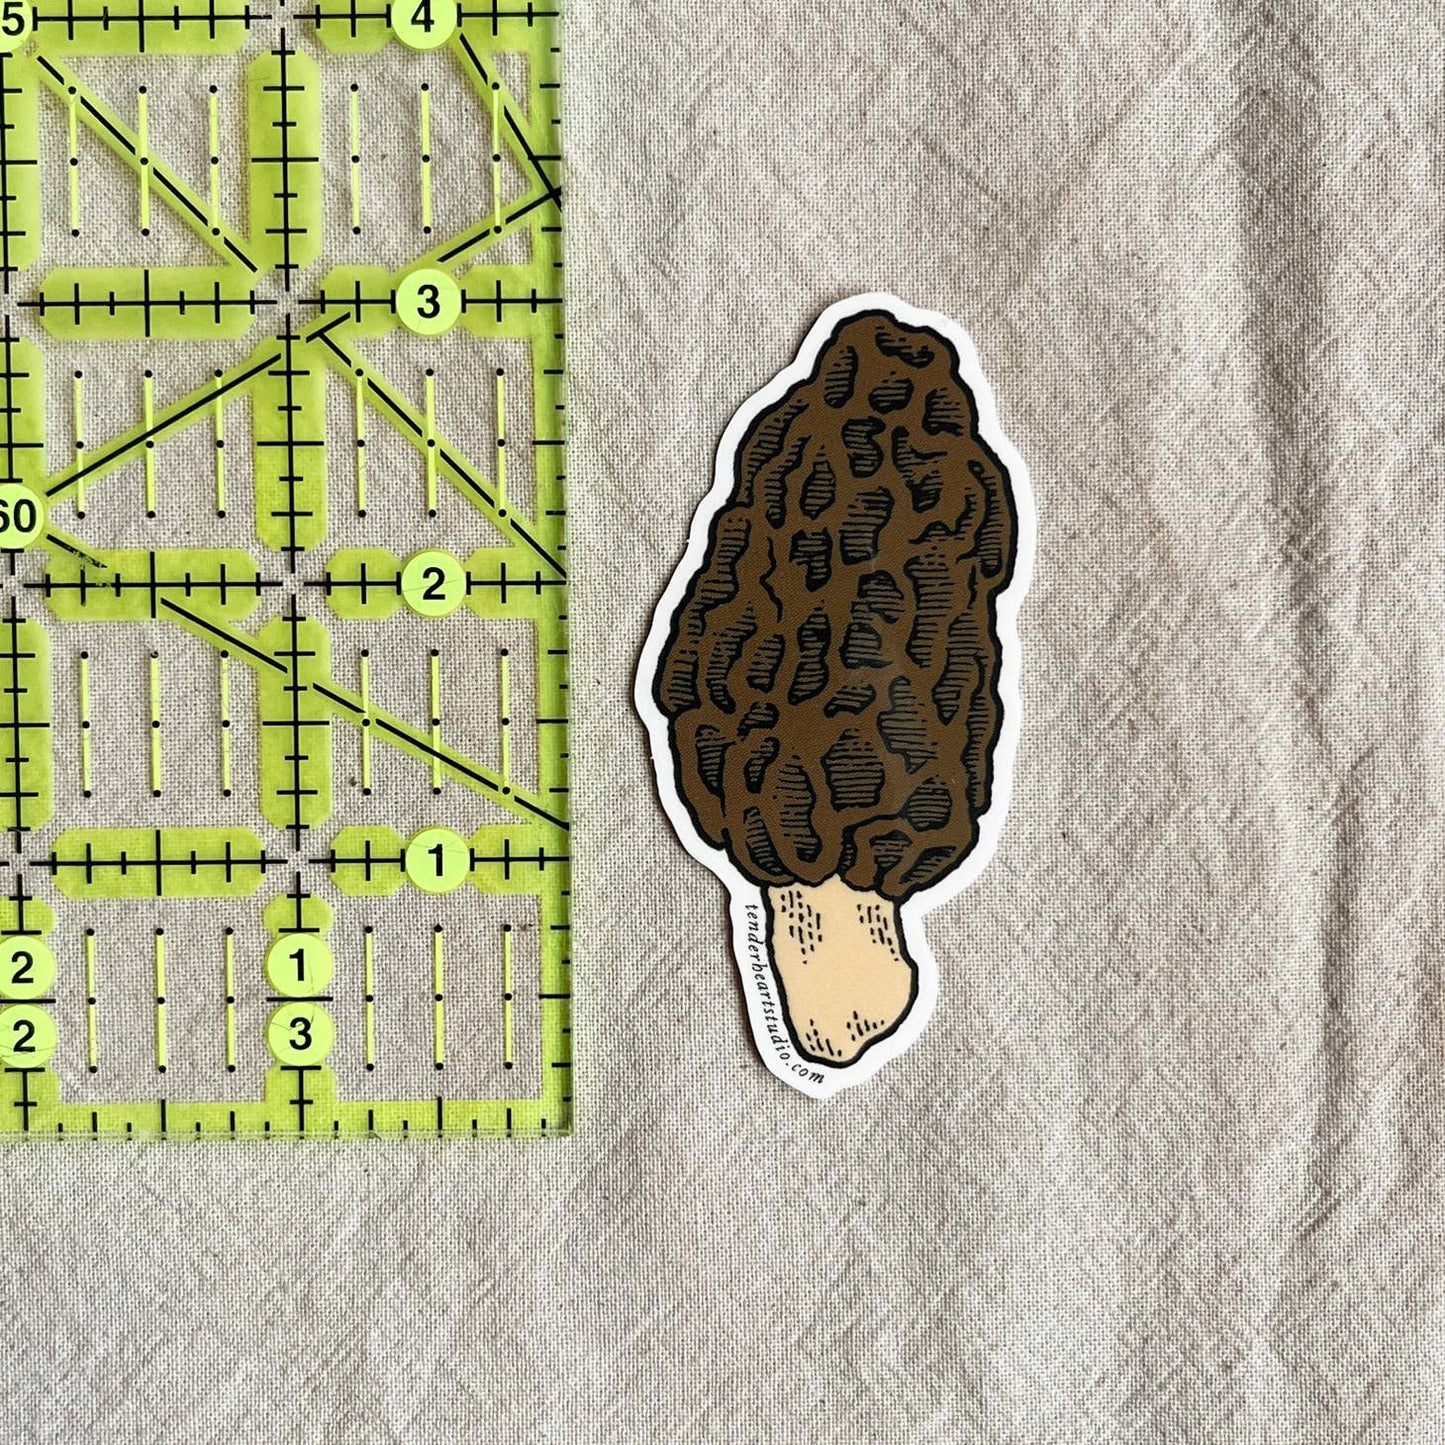 Mushroom Stickers